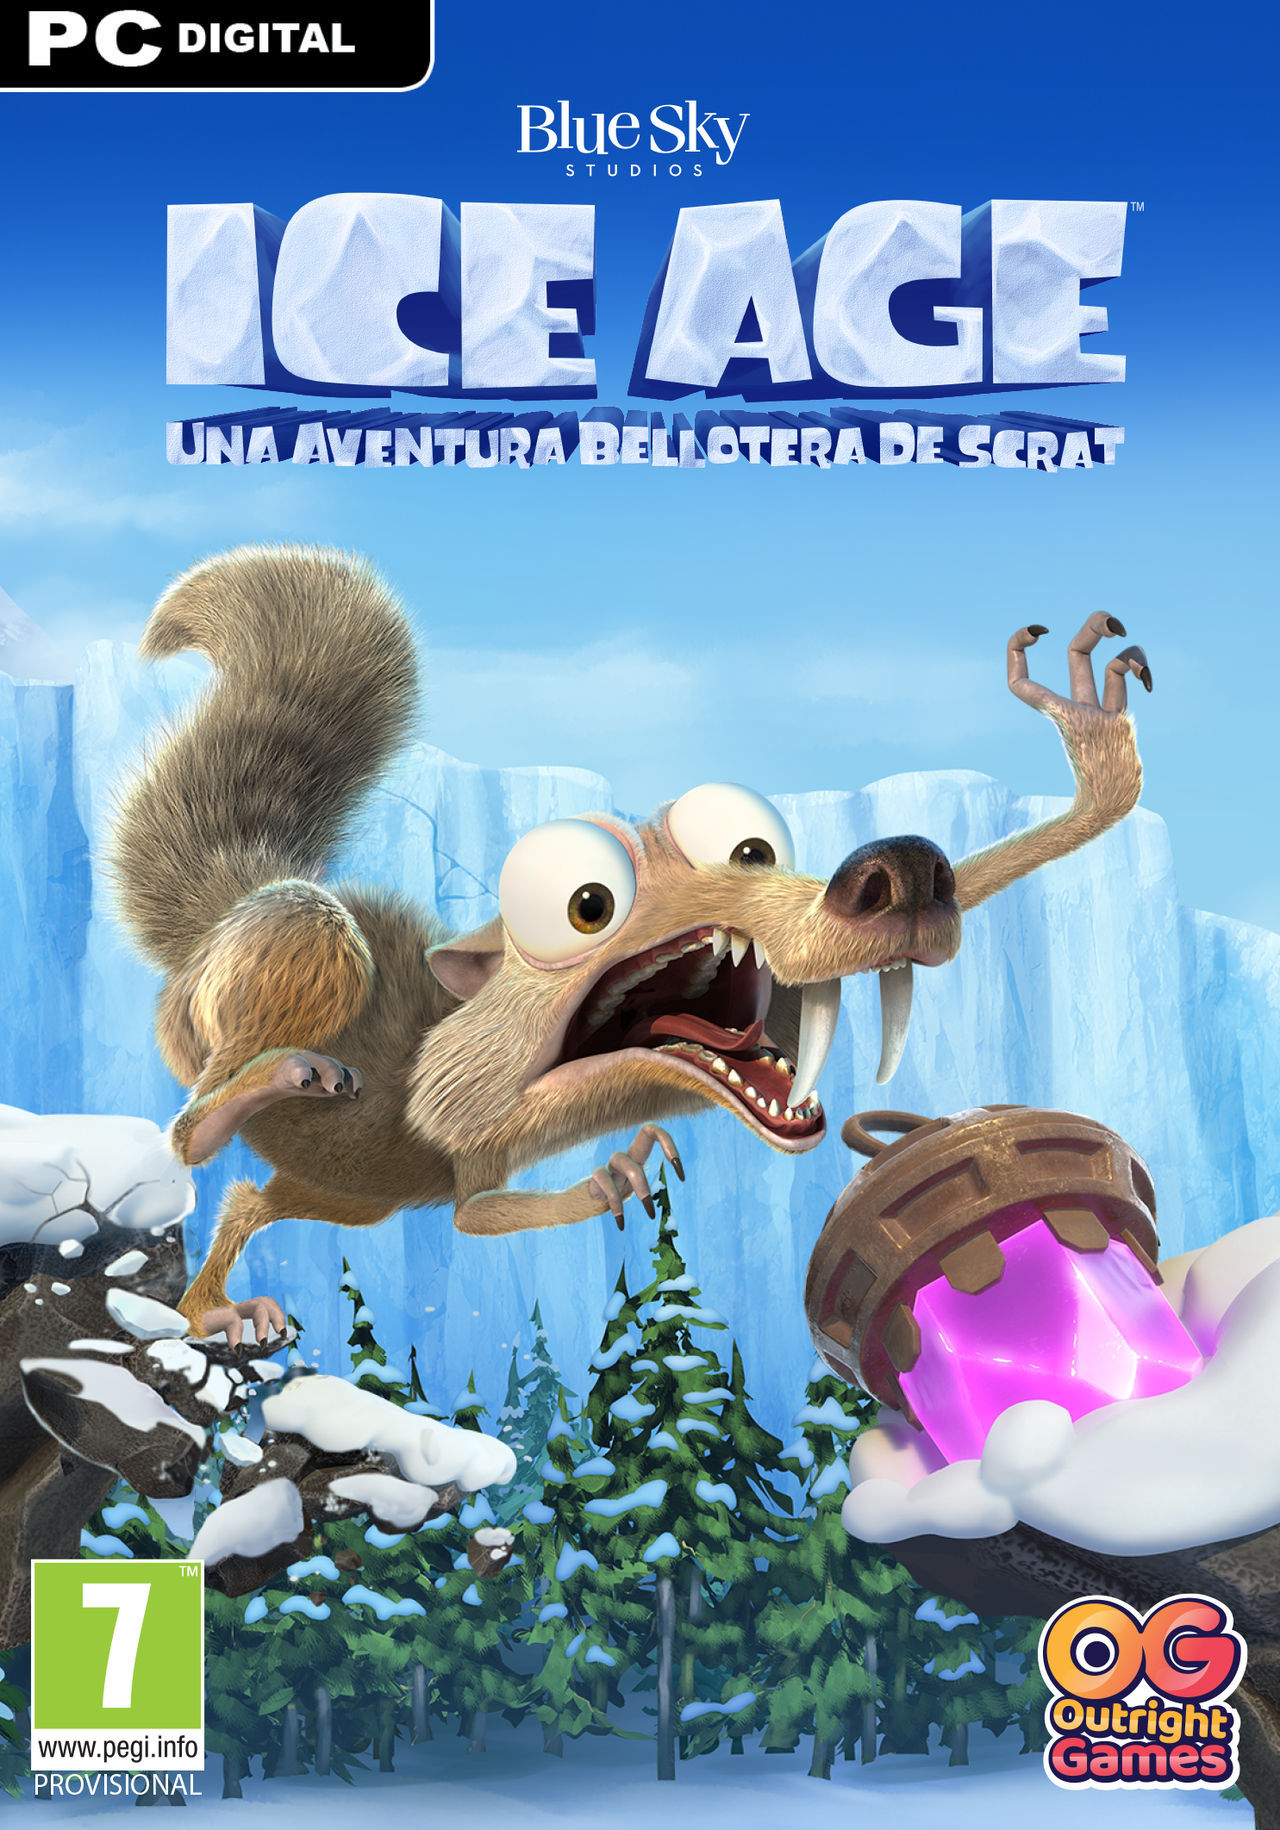 . ice age: scrat